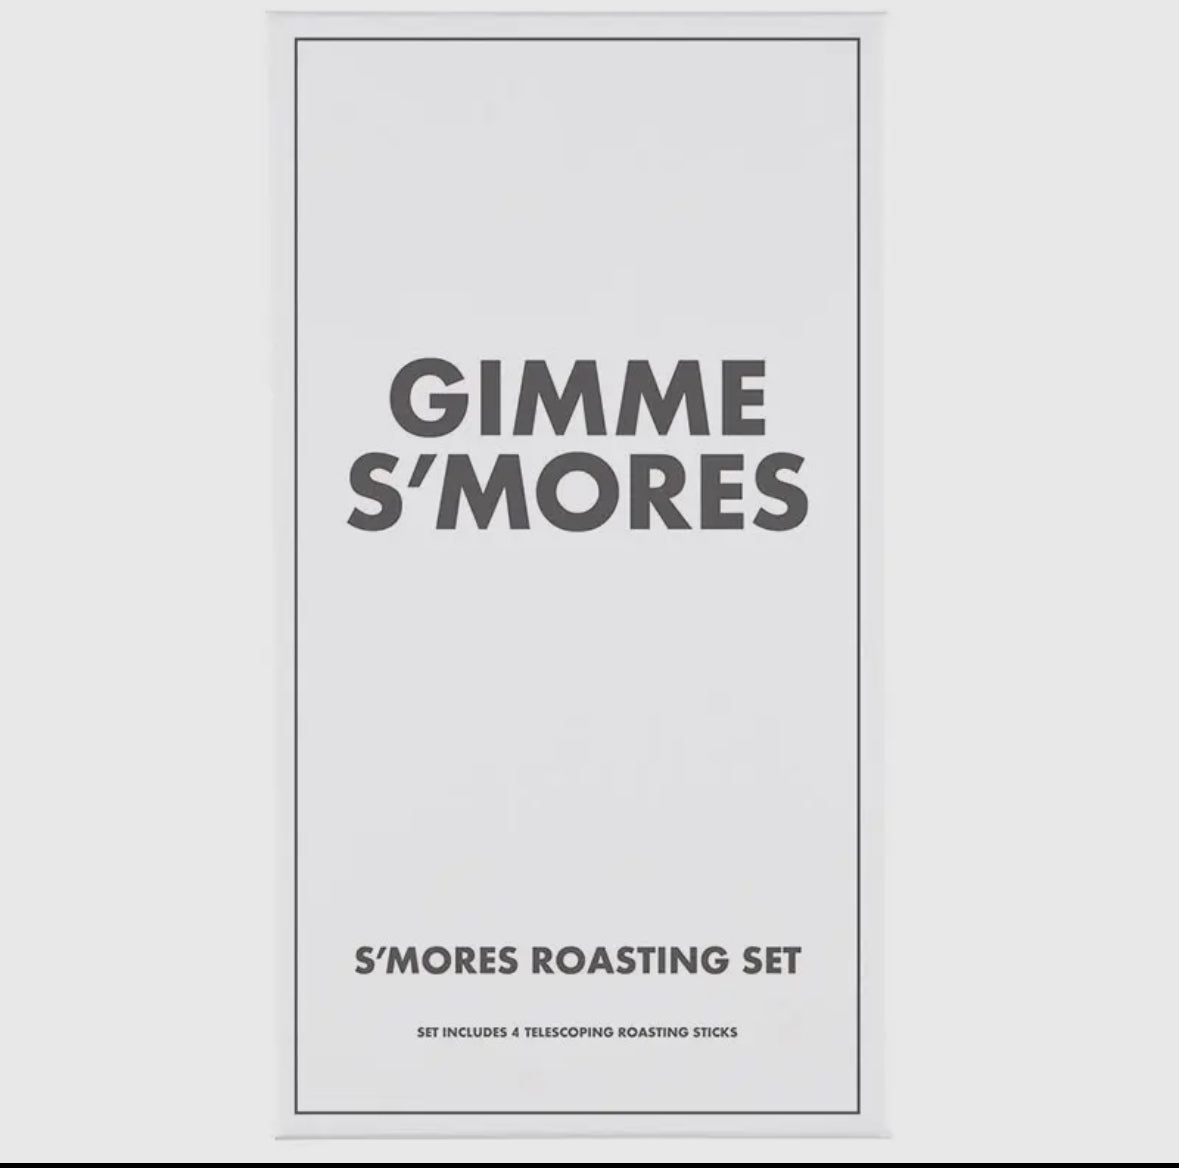 Gimme S’mores Roasting Set